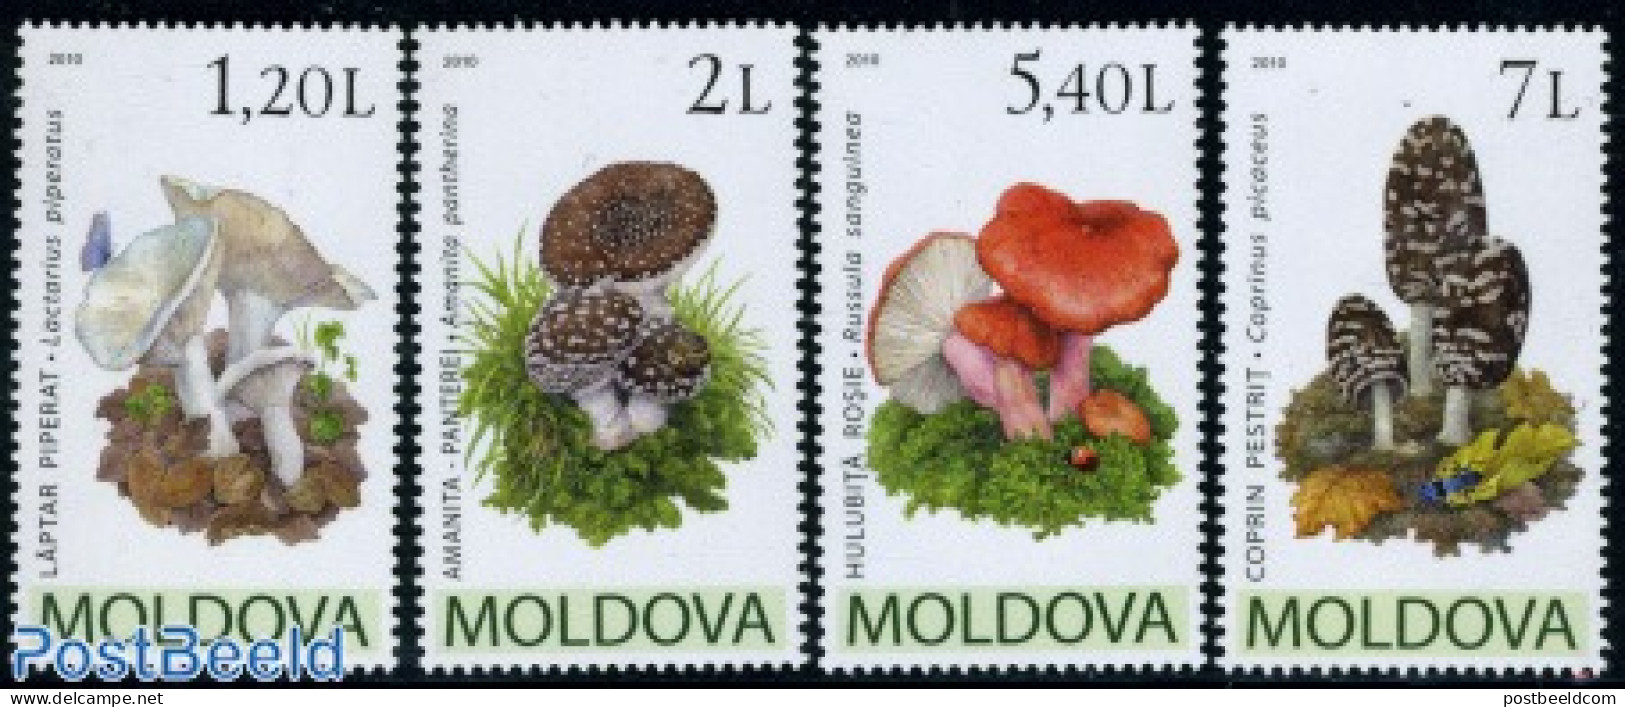 Moldova 2010 Mushrooms 4v, Mint NH, Nature - Mushrooms - Champignons